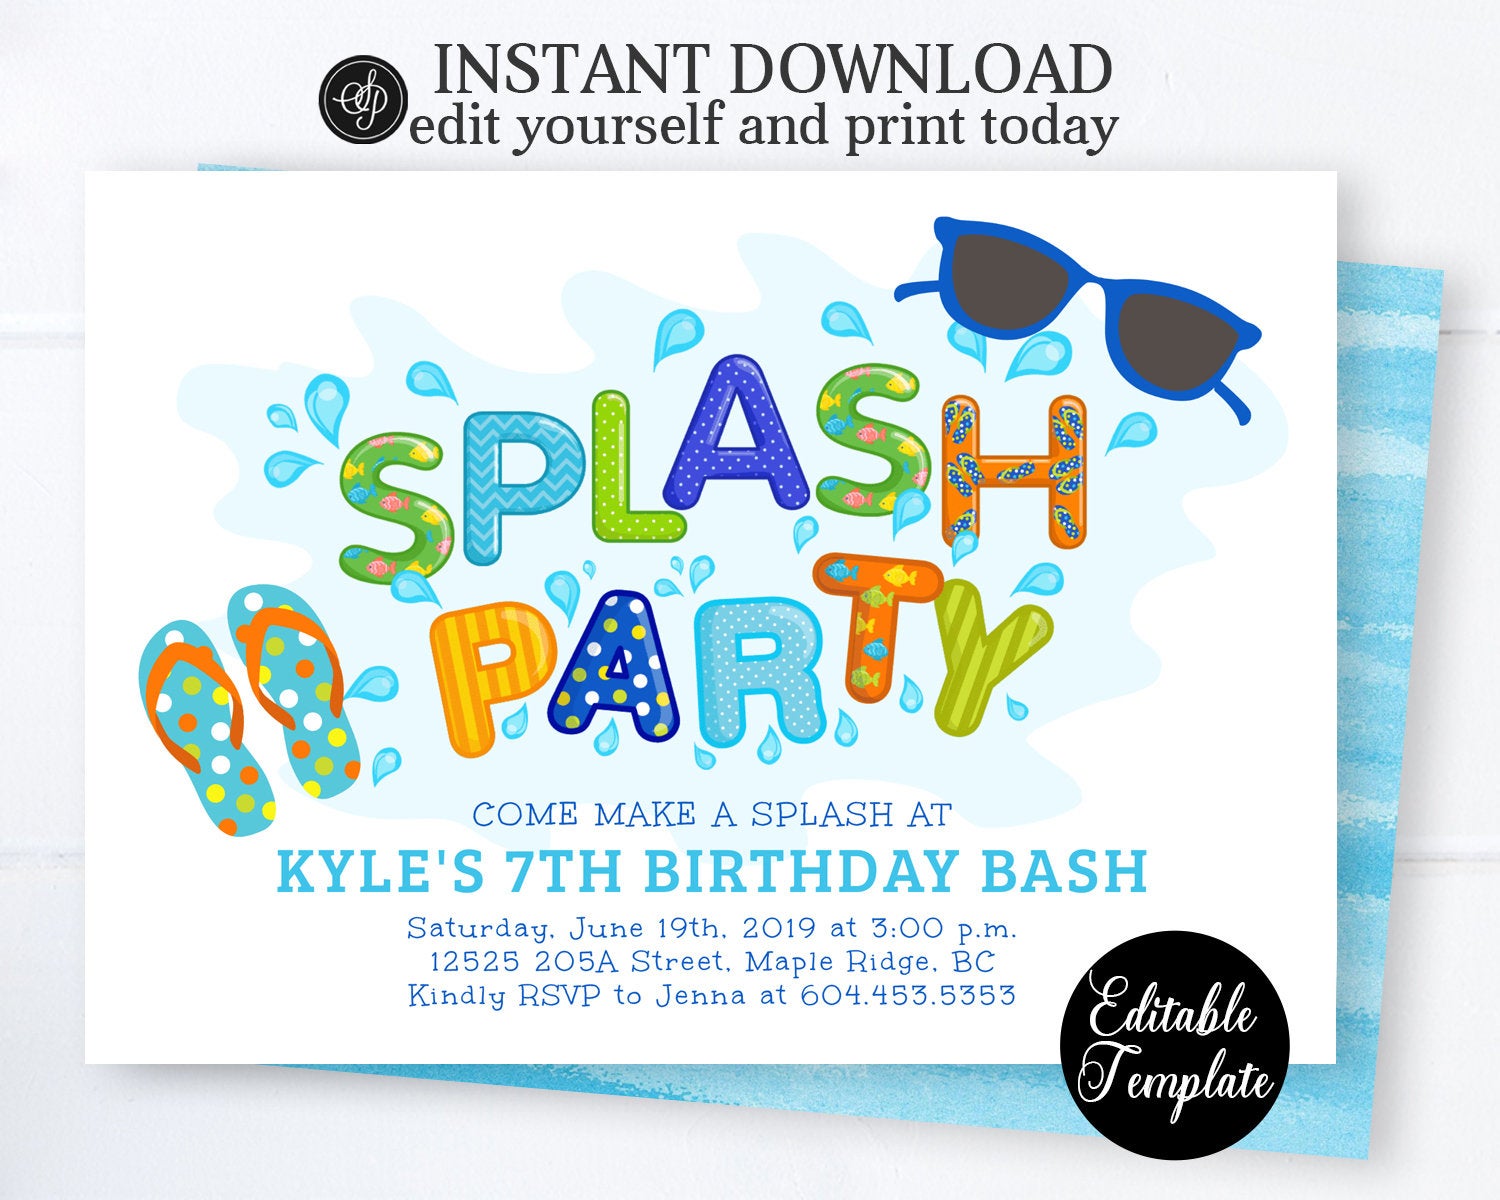 Splash Party Invitations Free Printable - FREE PRINTABLE TEMPLATES